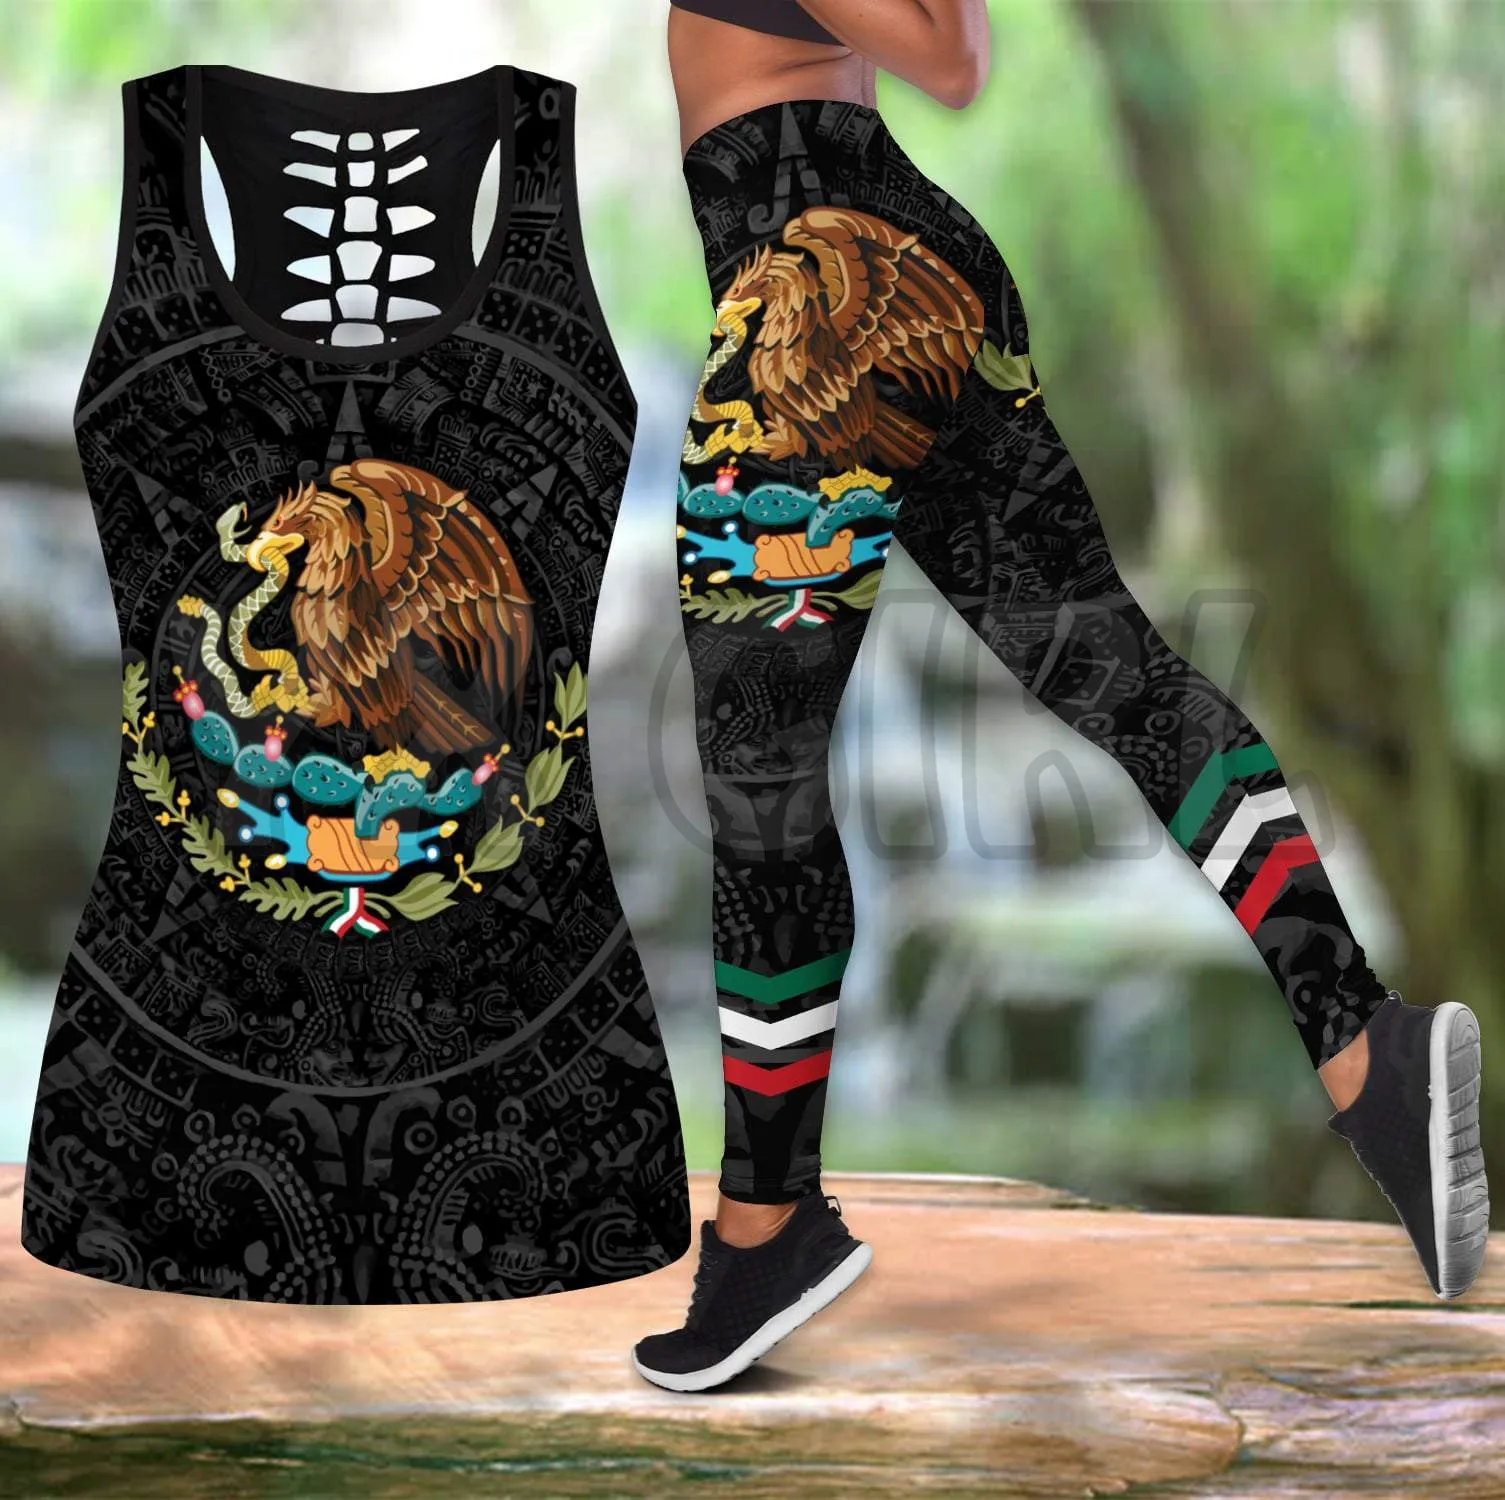 Aztec Mexico Combo Tank Top + Legging 3D Printed Tank Top+Legging Combo Outfit Yoga Fitness Legging Women